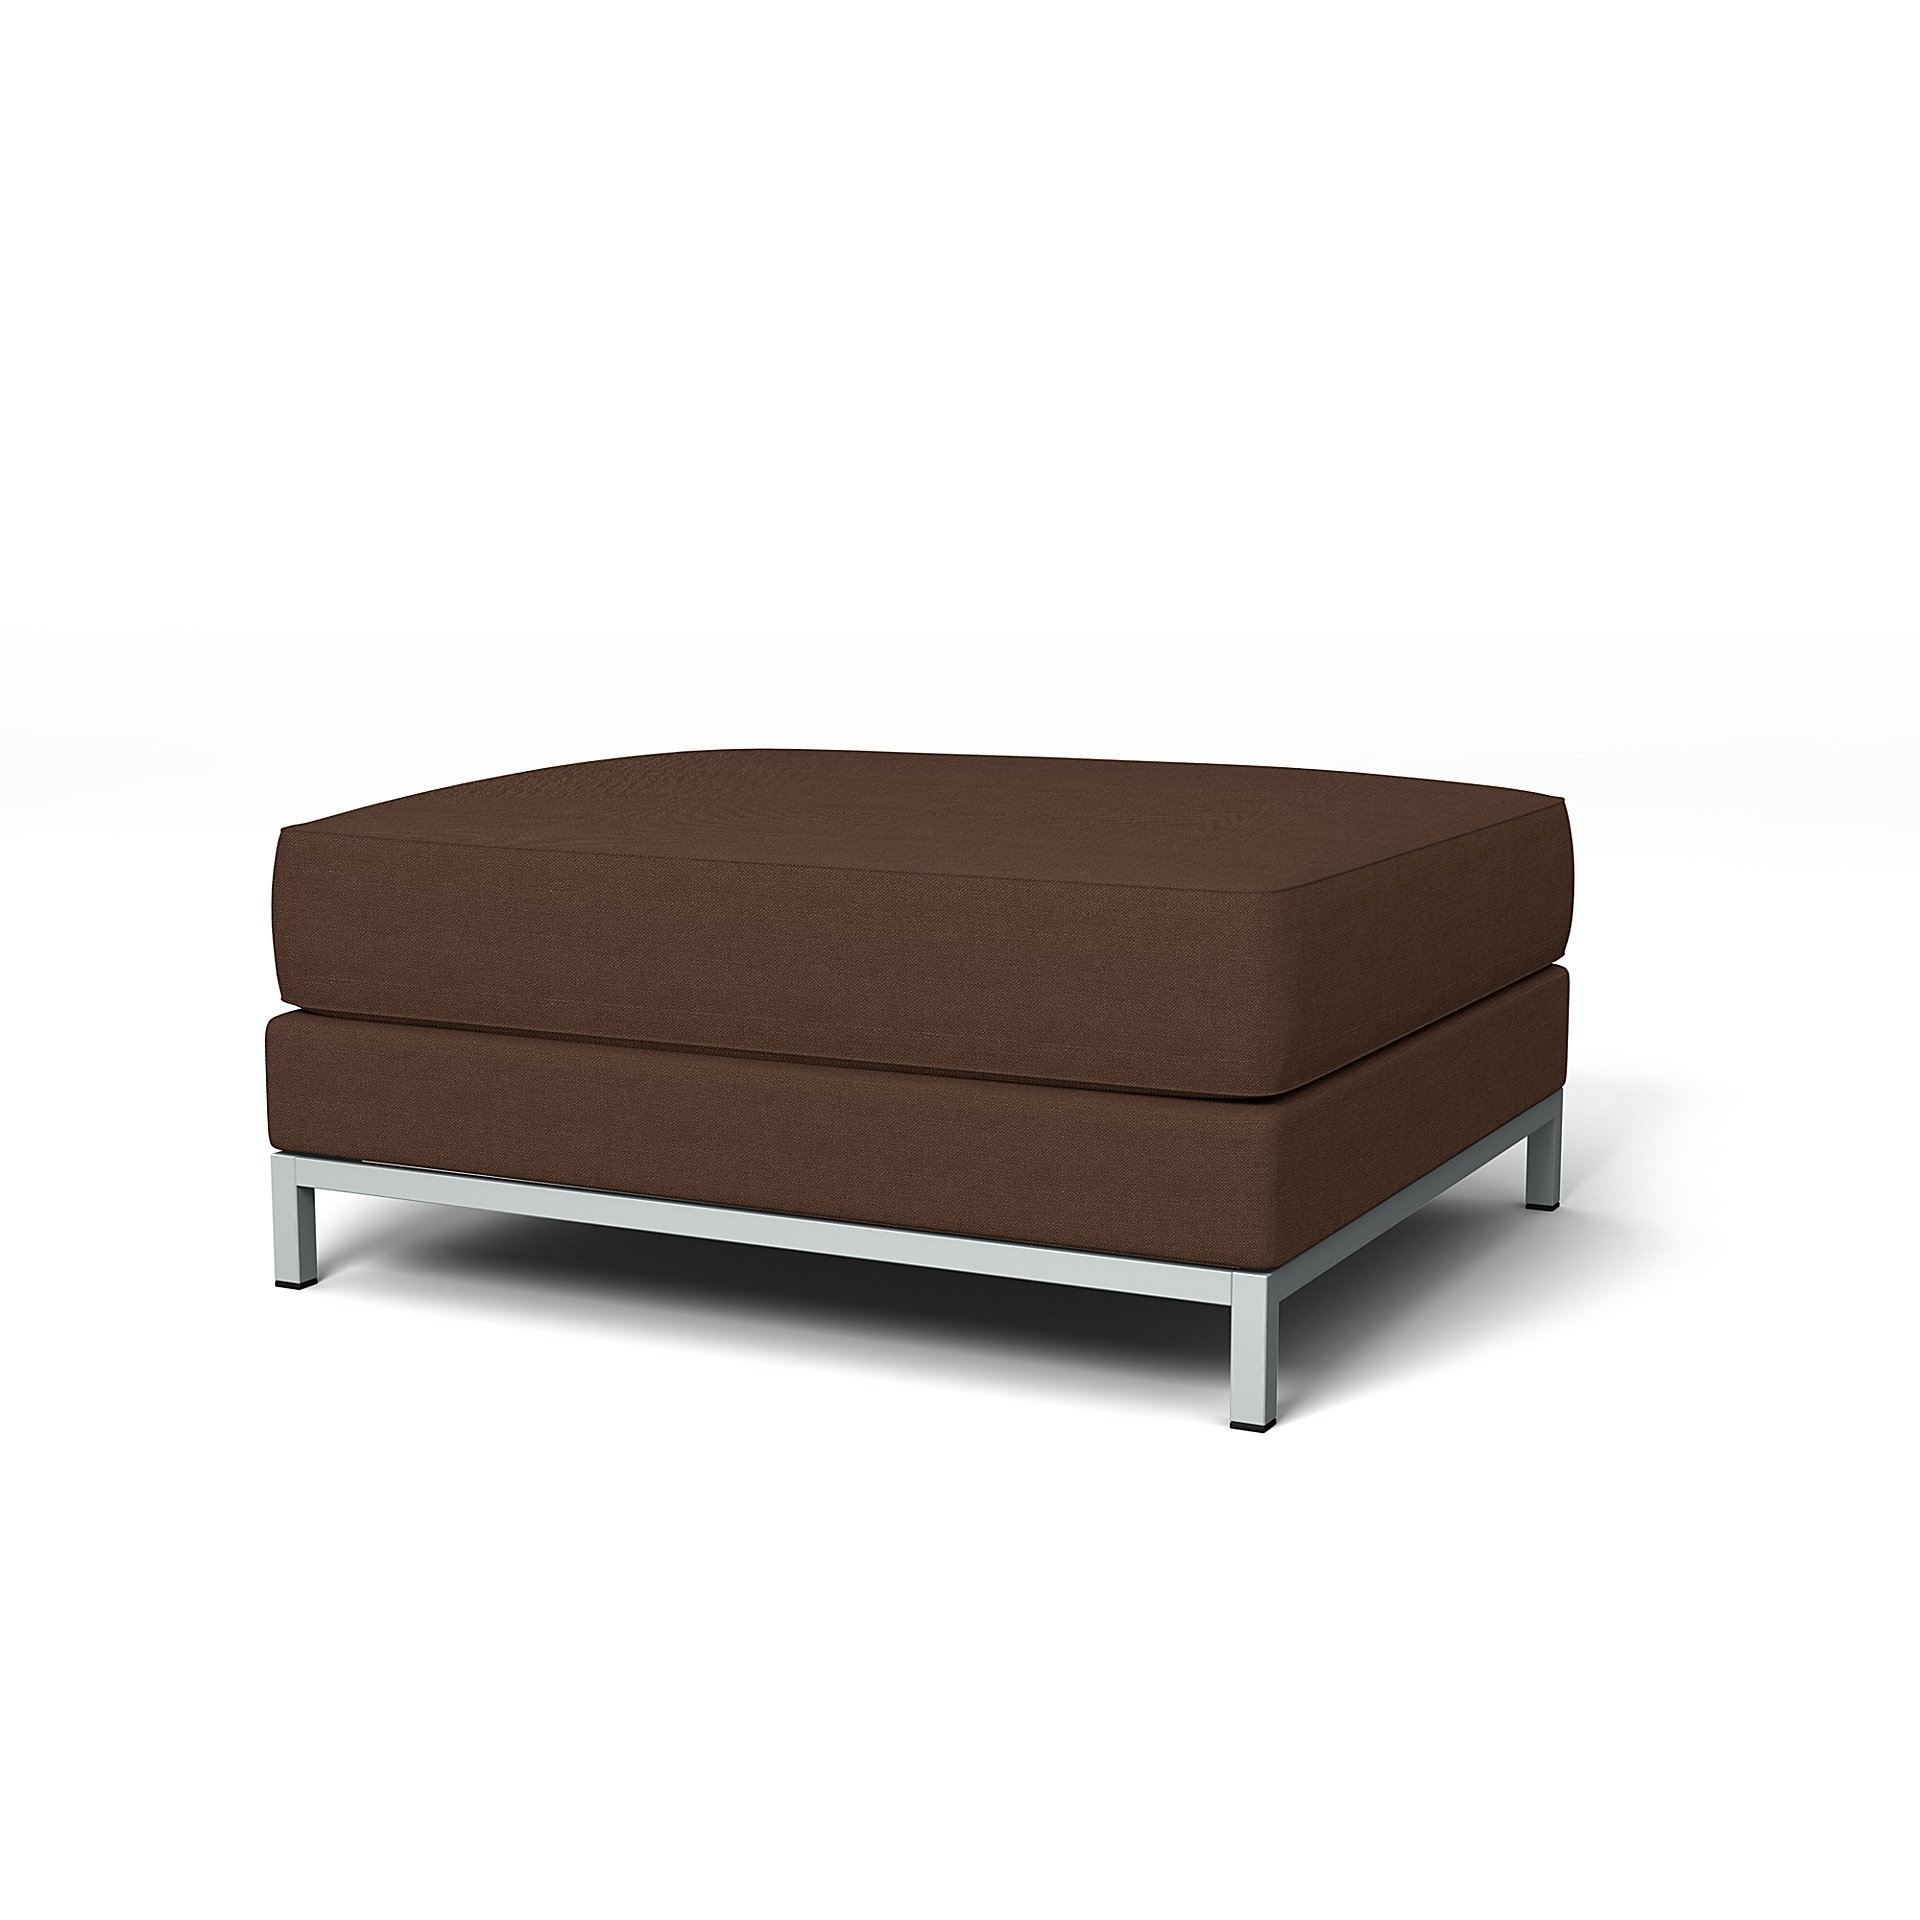 IKEA - Kramfors Footstool Cover, Chocolate, Linen - Bemz